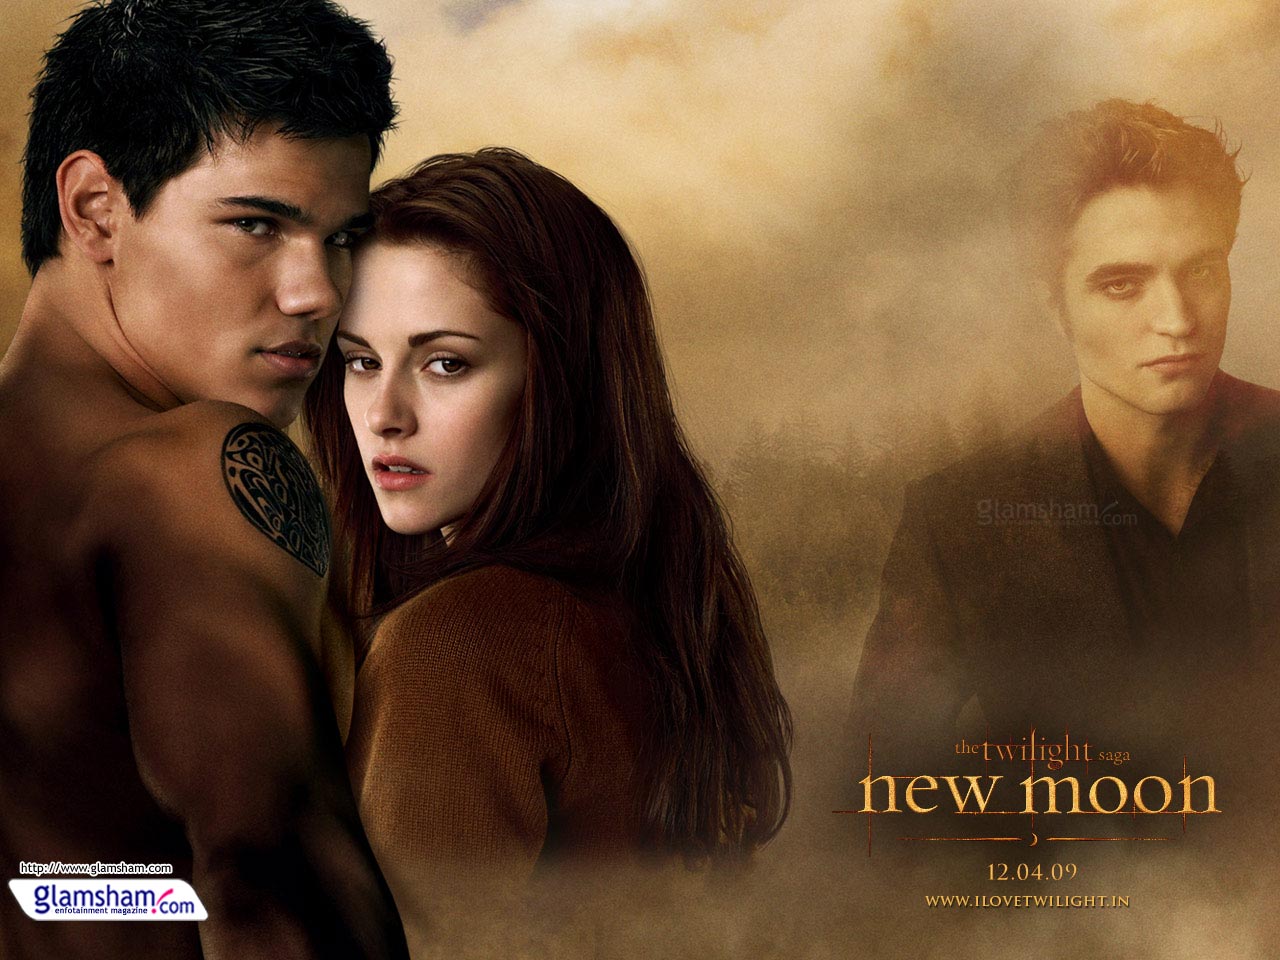 The Twilight Saga - New Moon movie wallpaper 21324 - Glamsham